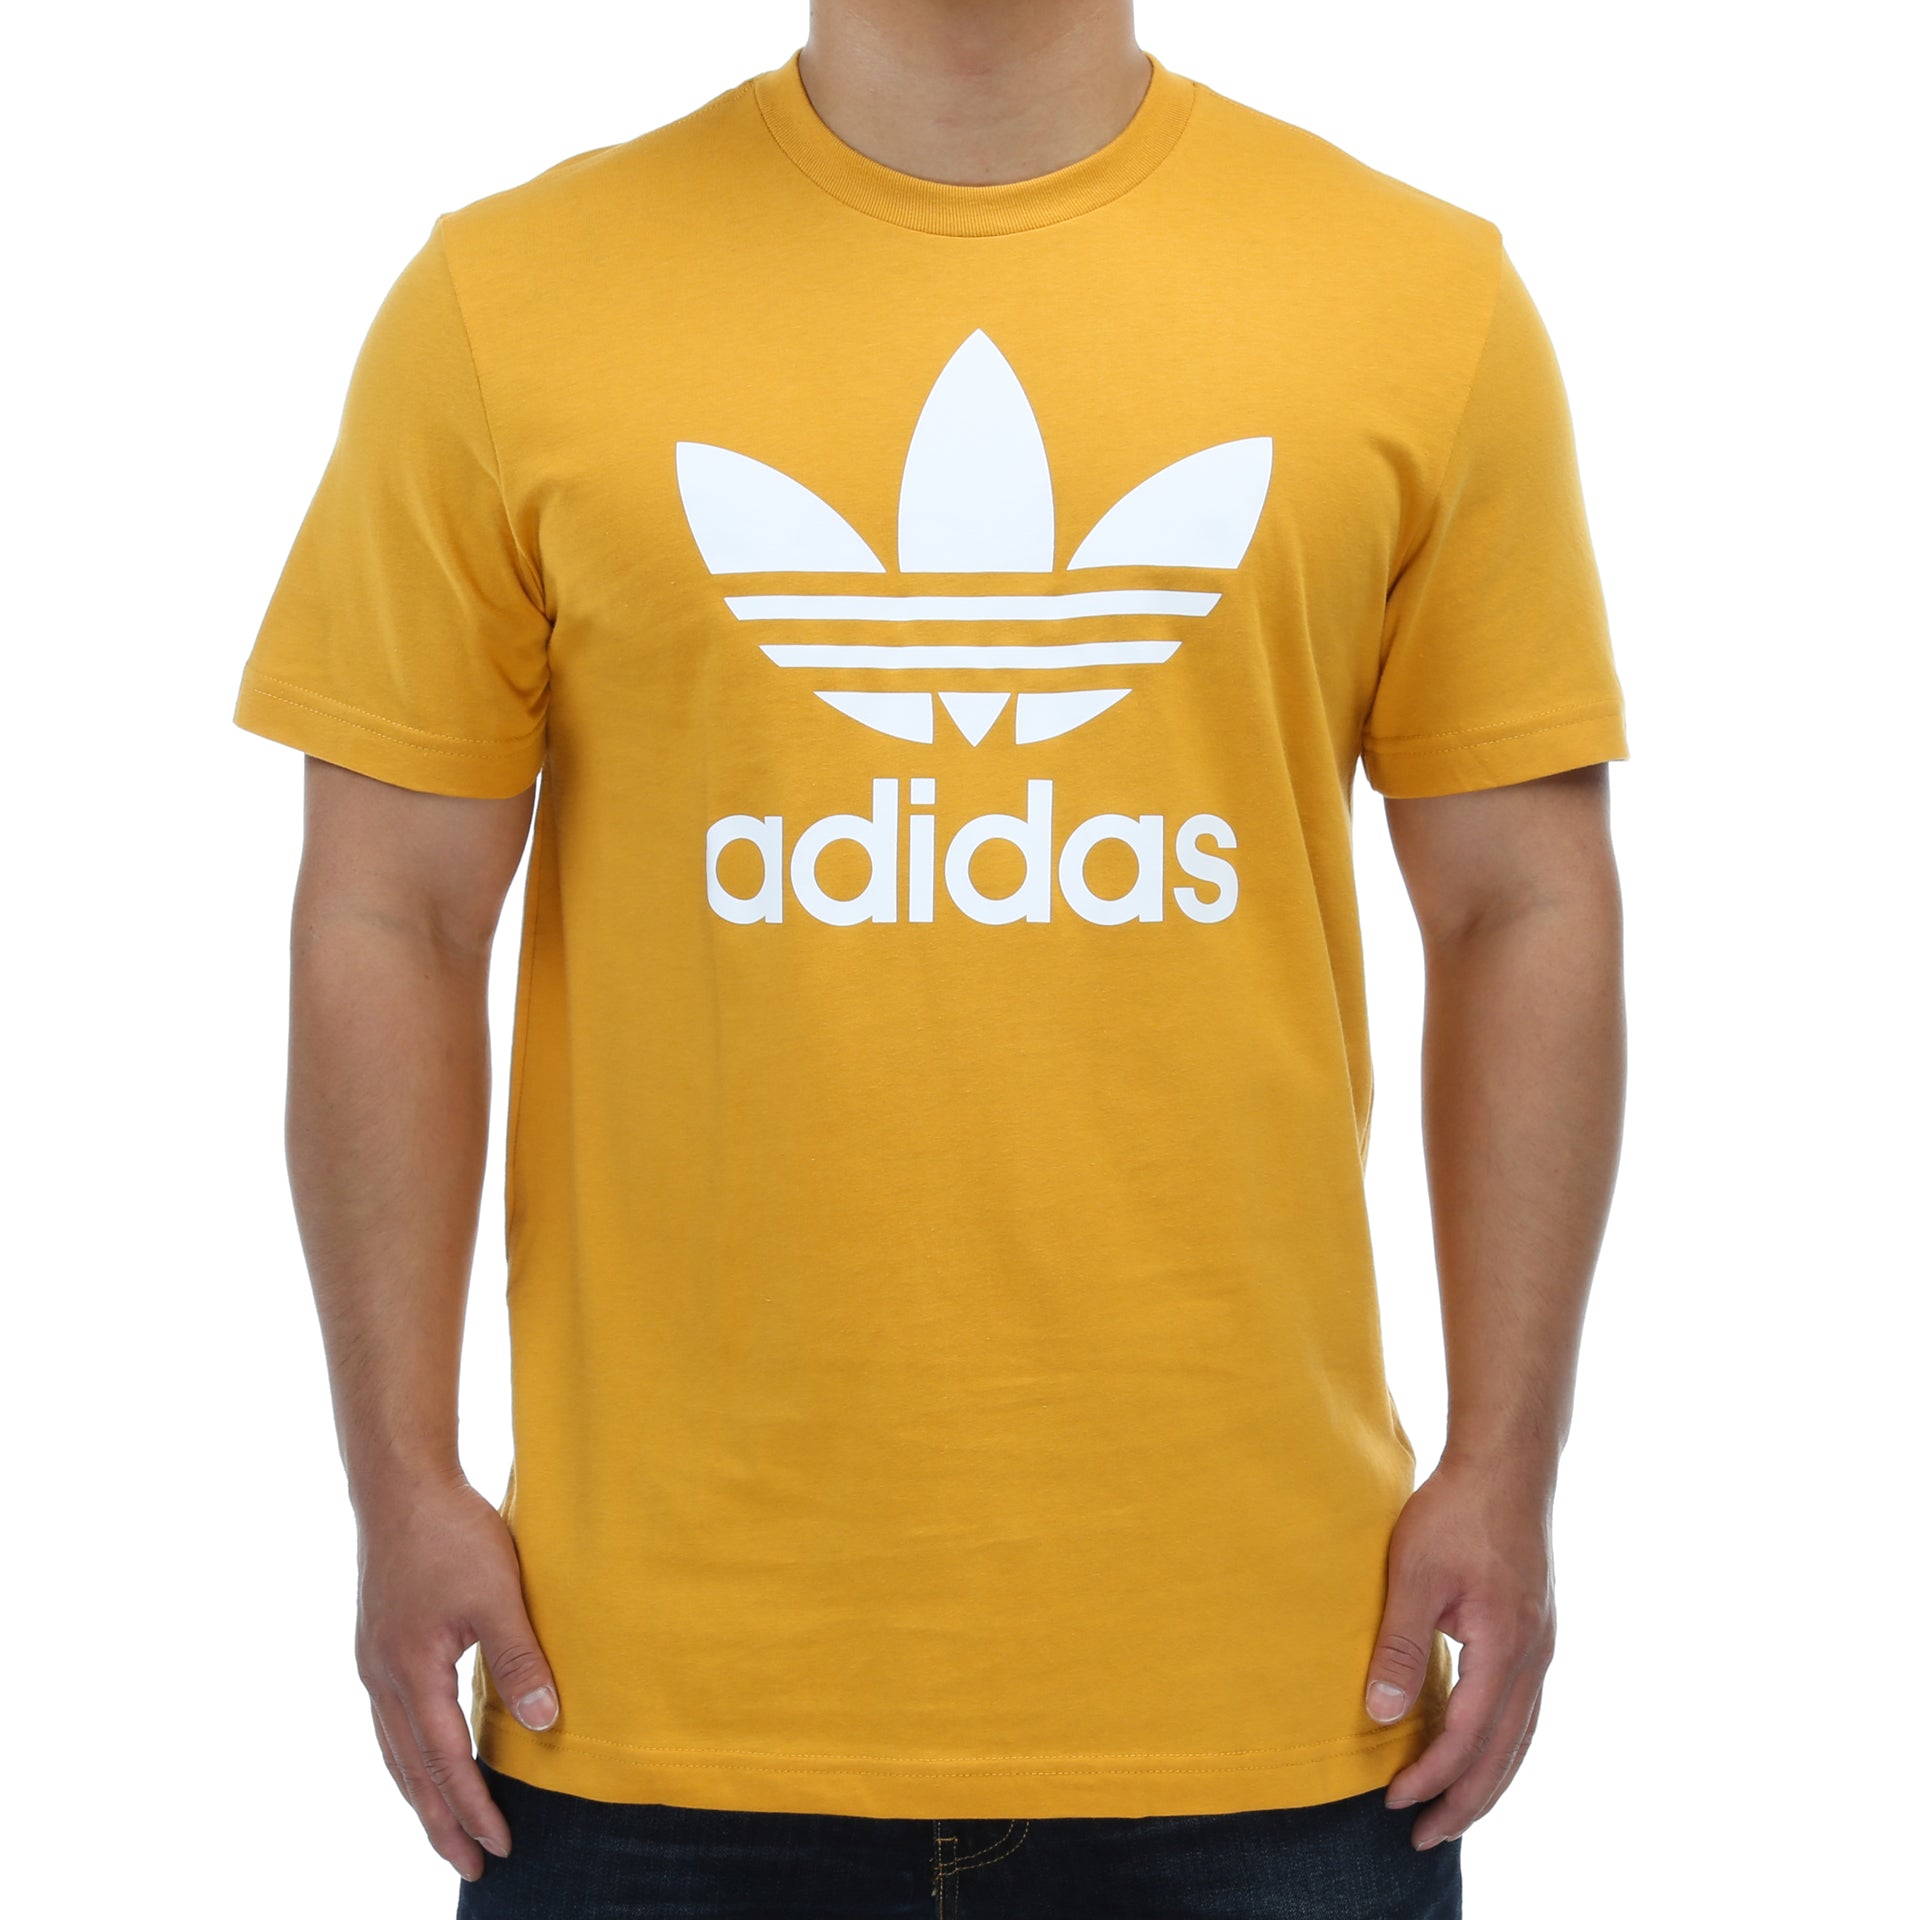 Adidas Original Trefoil Tee - Tactile Yellow - New Star